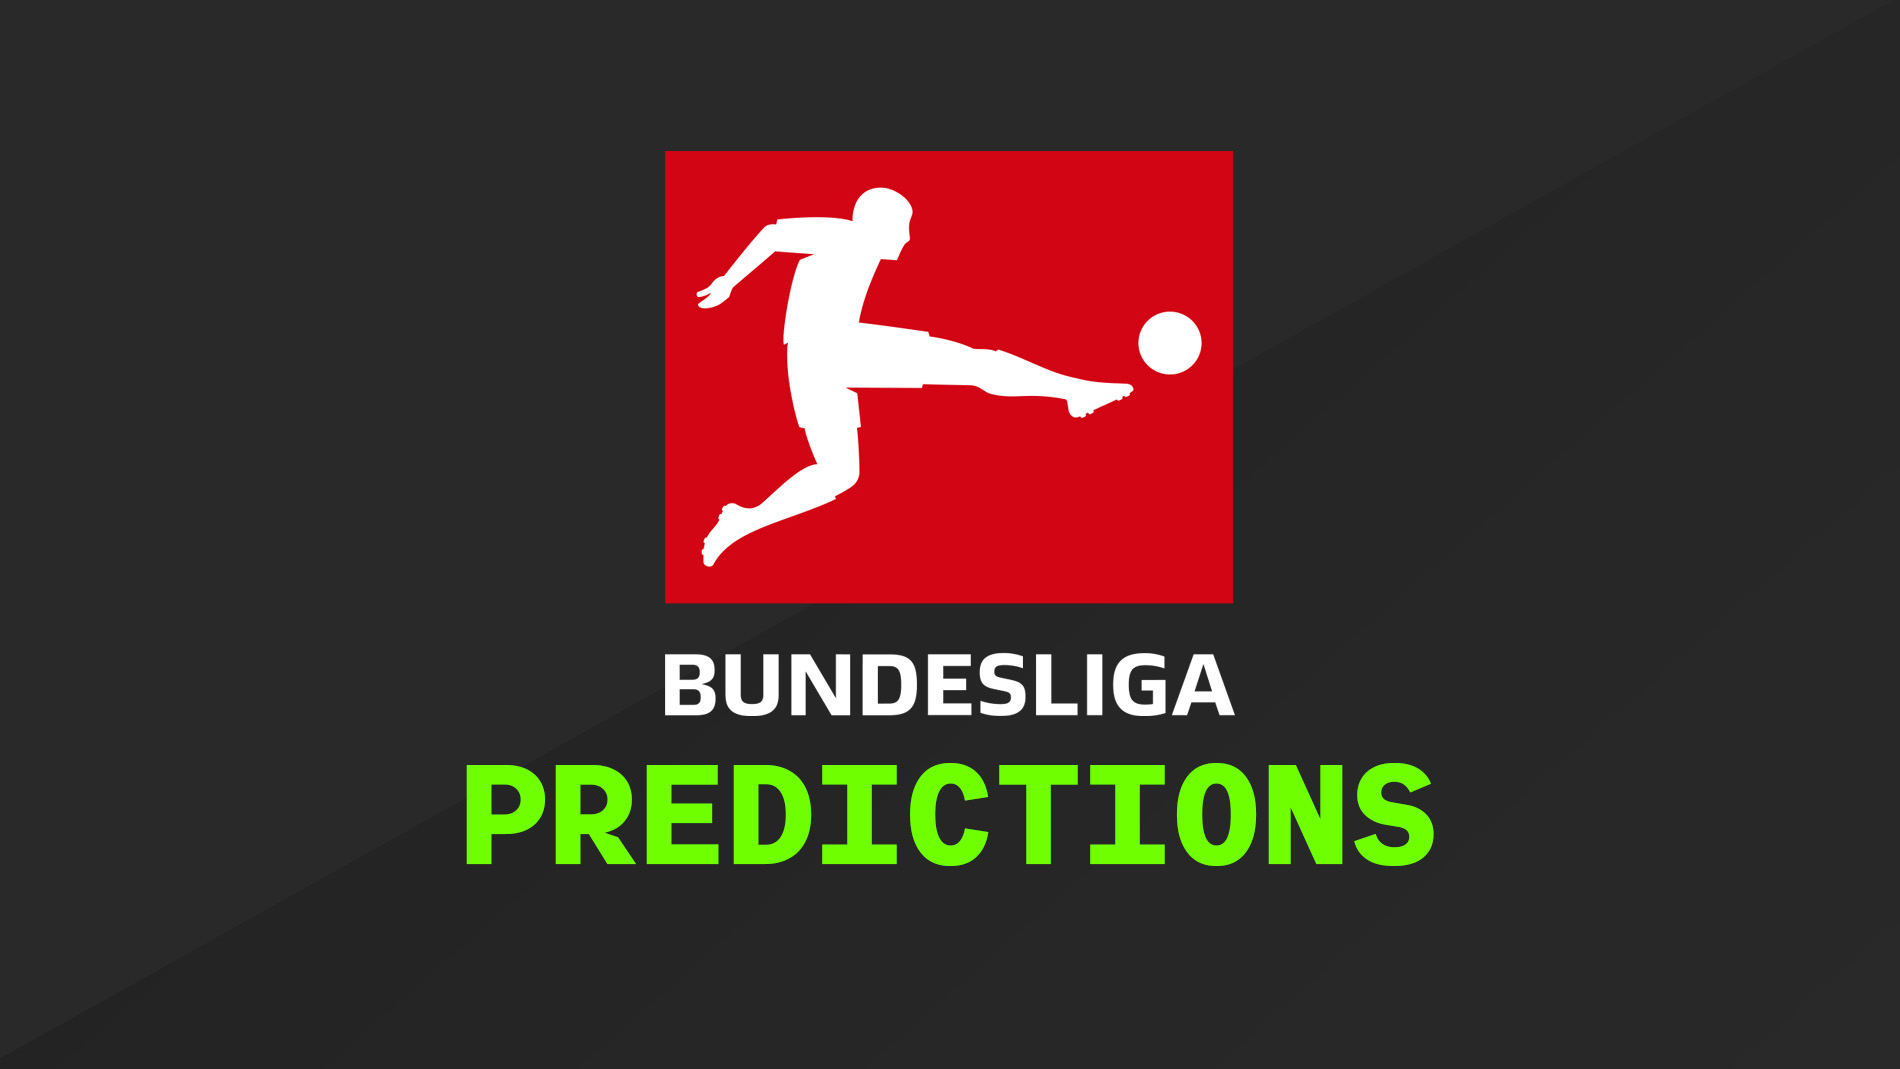 GGFN Bundesliga Prediction  2023/24 Table - Get German Football News